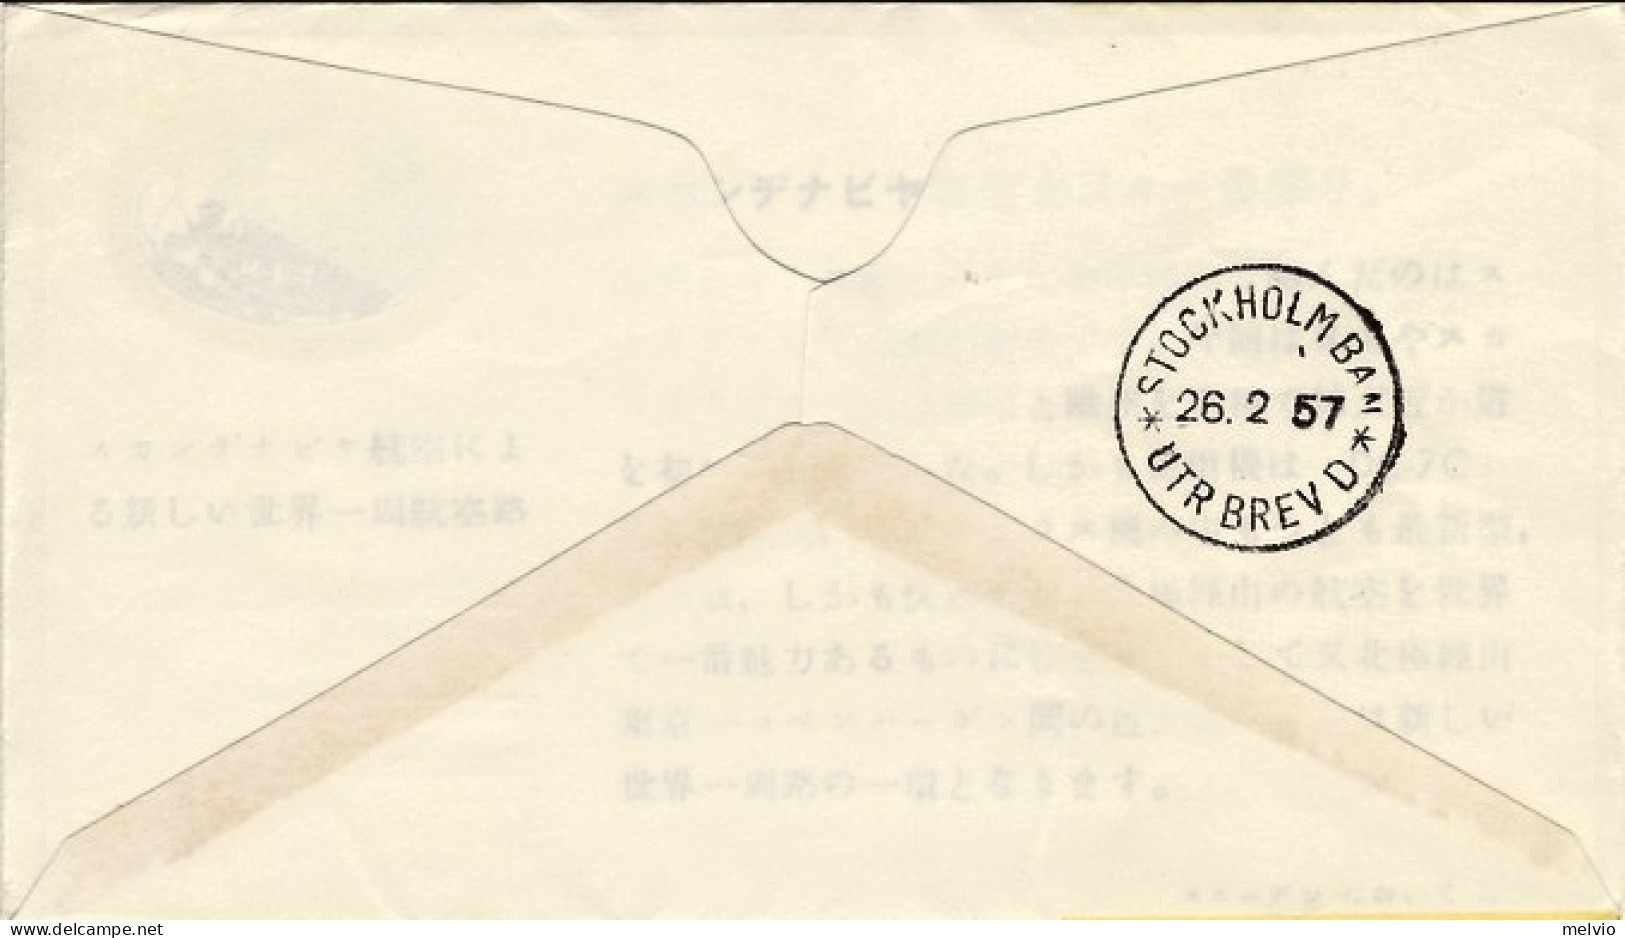 1957-Giappone Japan I^volo SAS Tokyo Stoccolma Attraverso Il Polo Nord - Lettres & Documents